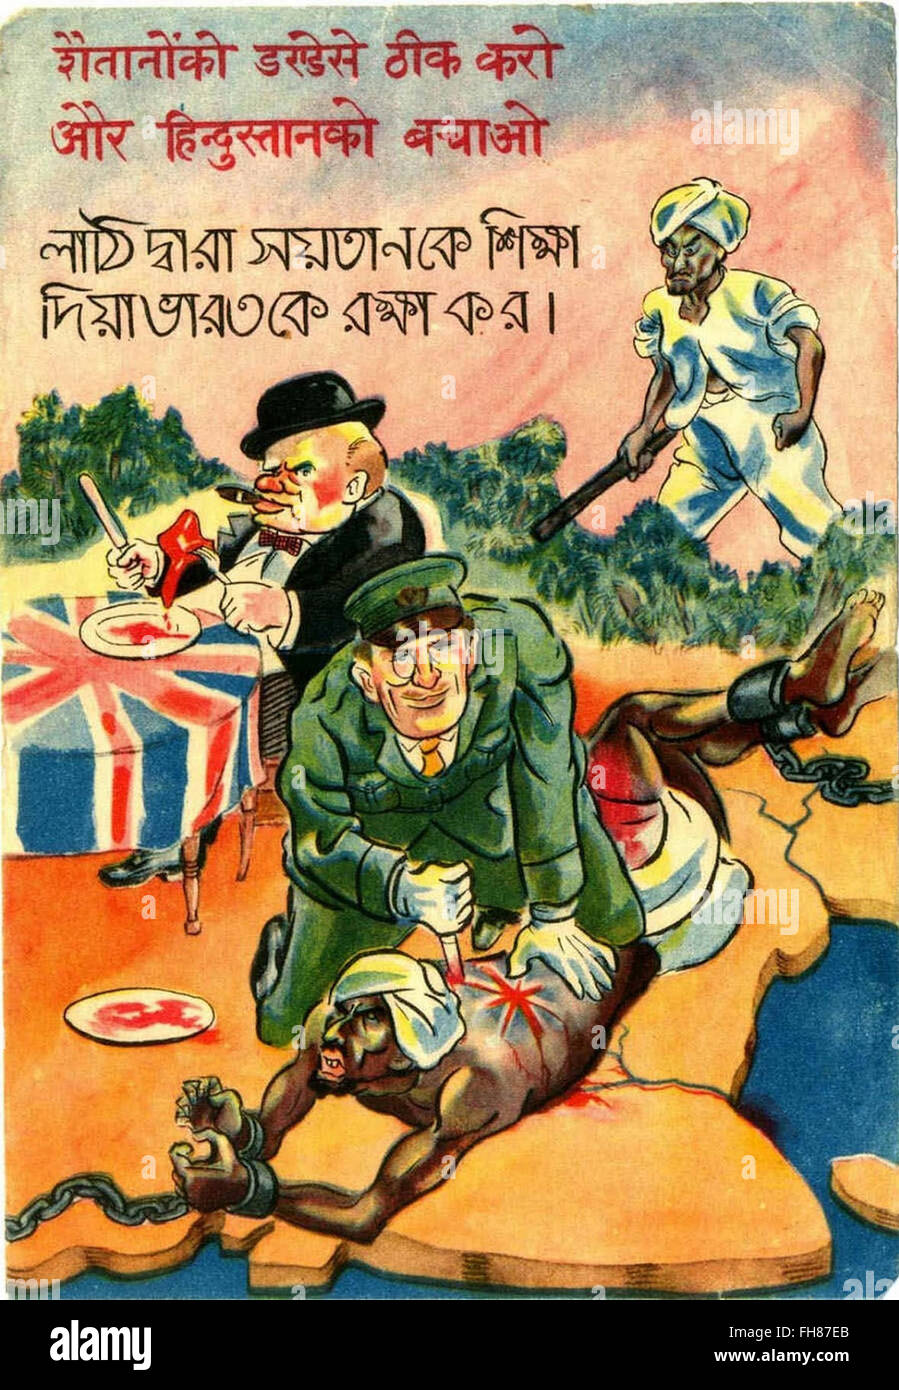 japanese-propaganda-targeting-indian-troops-against-british-propaganda-FH87EB.jpg